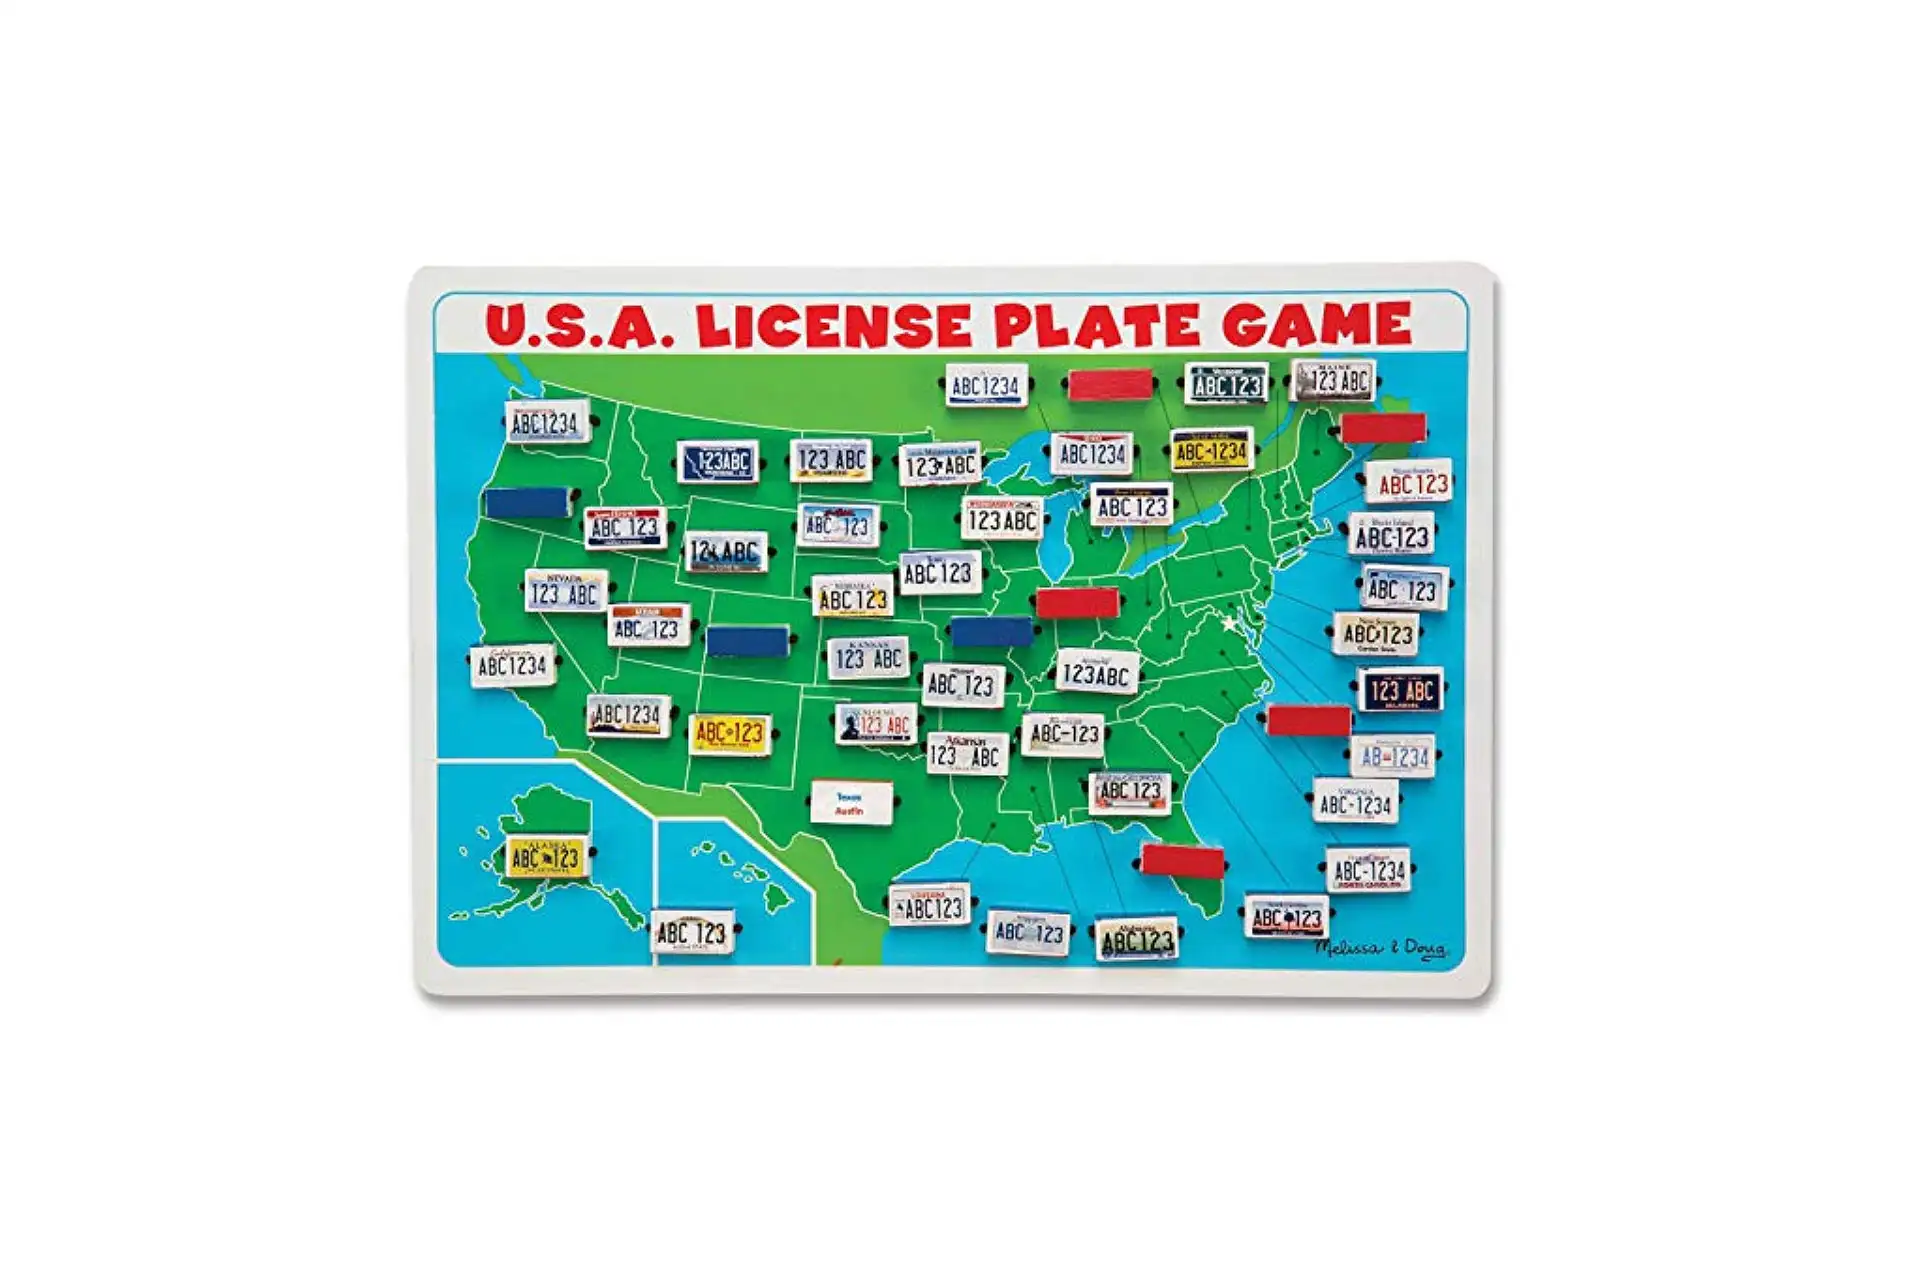 Melissa and Doug License Plate Game